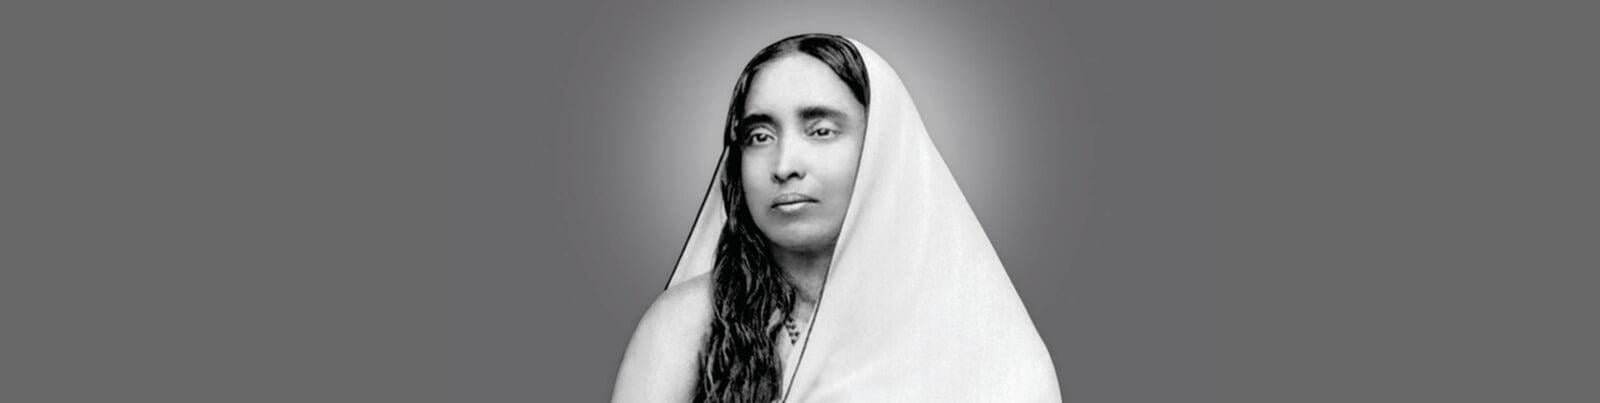 Holy Mother Sri Sarada Devi